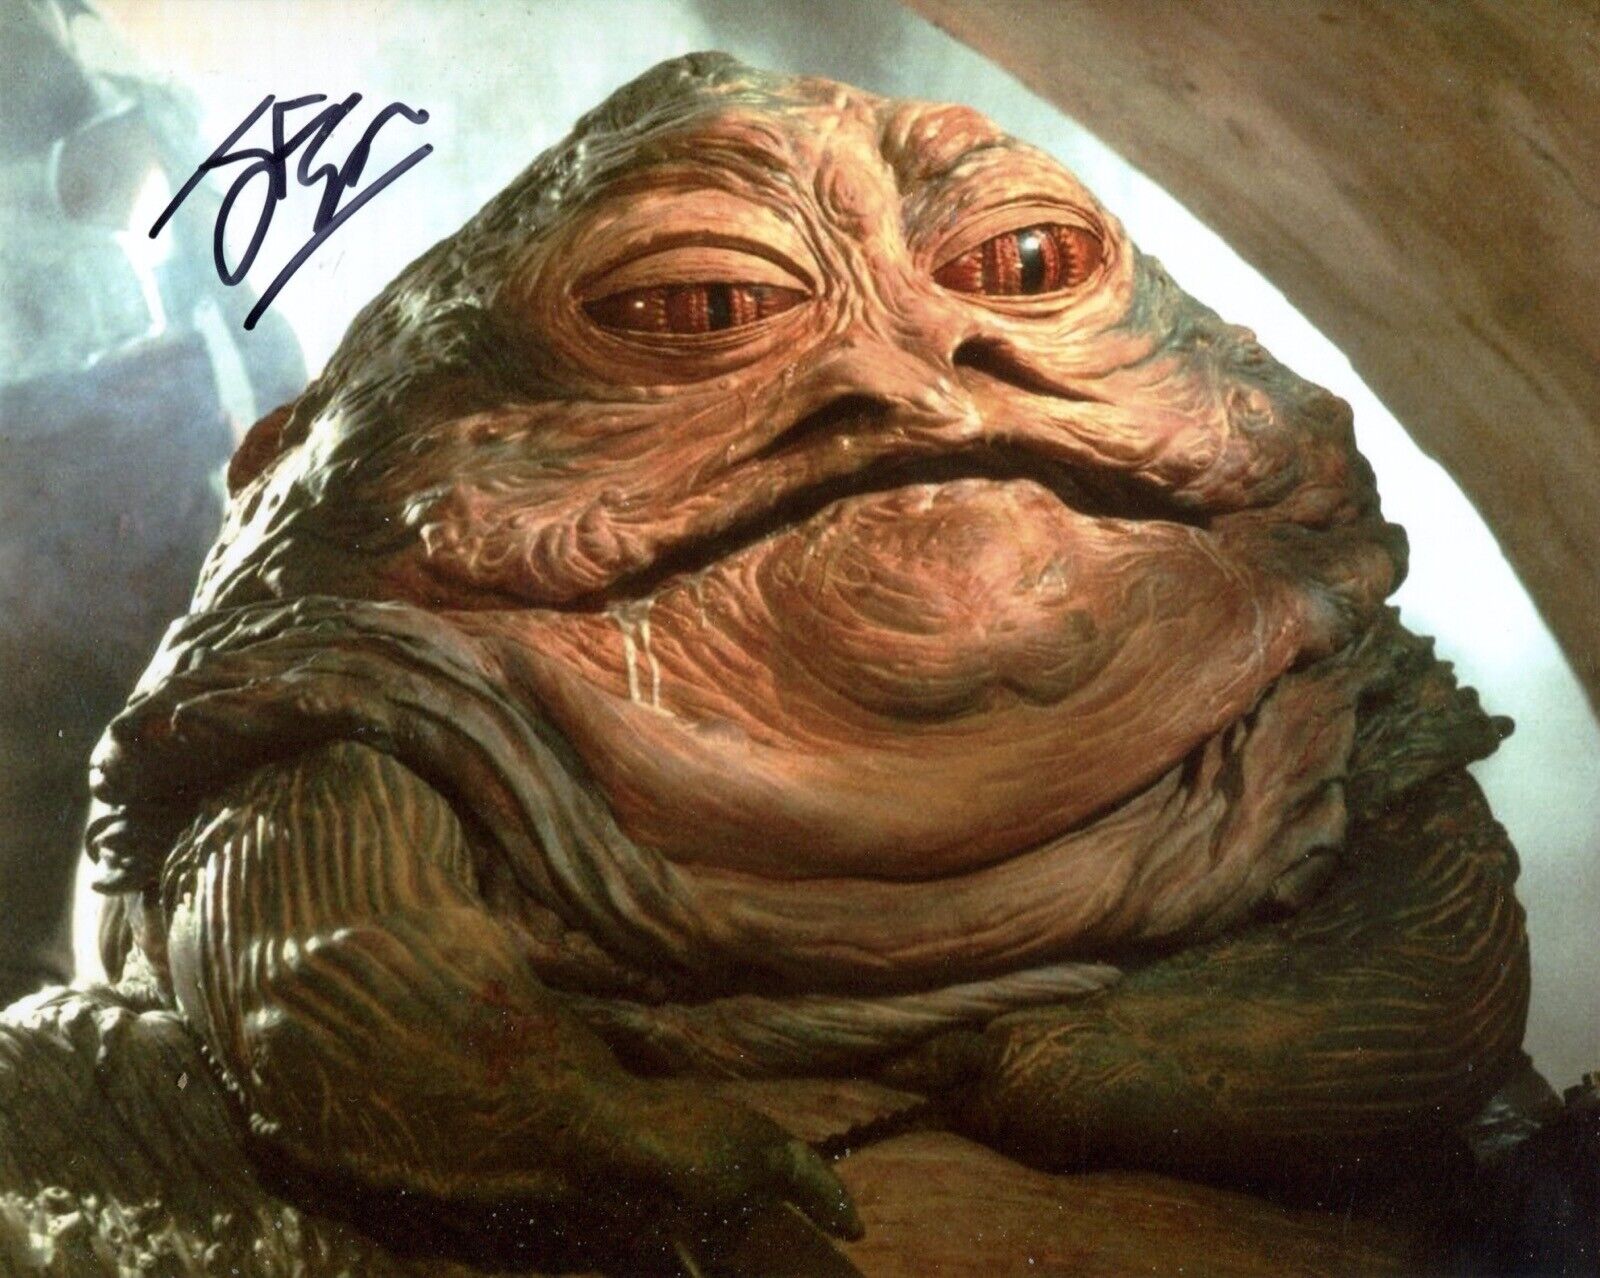 Star Wars Return of the Jedi Jabba the Hutt scene photo signed by John Coppinger 10 x 8 inch